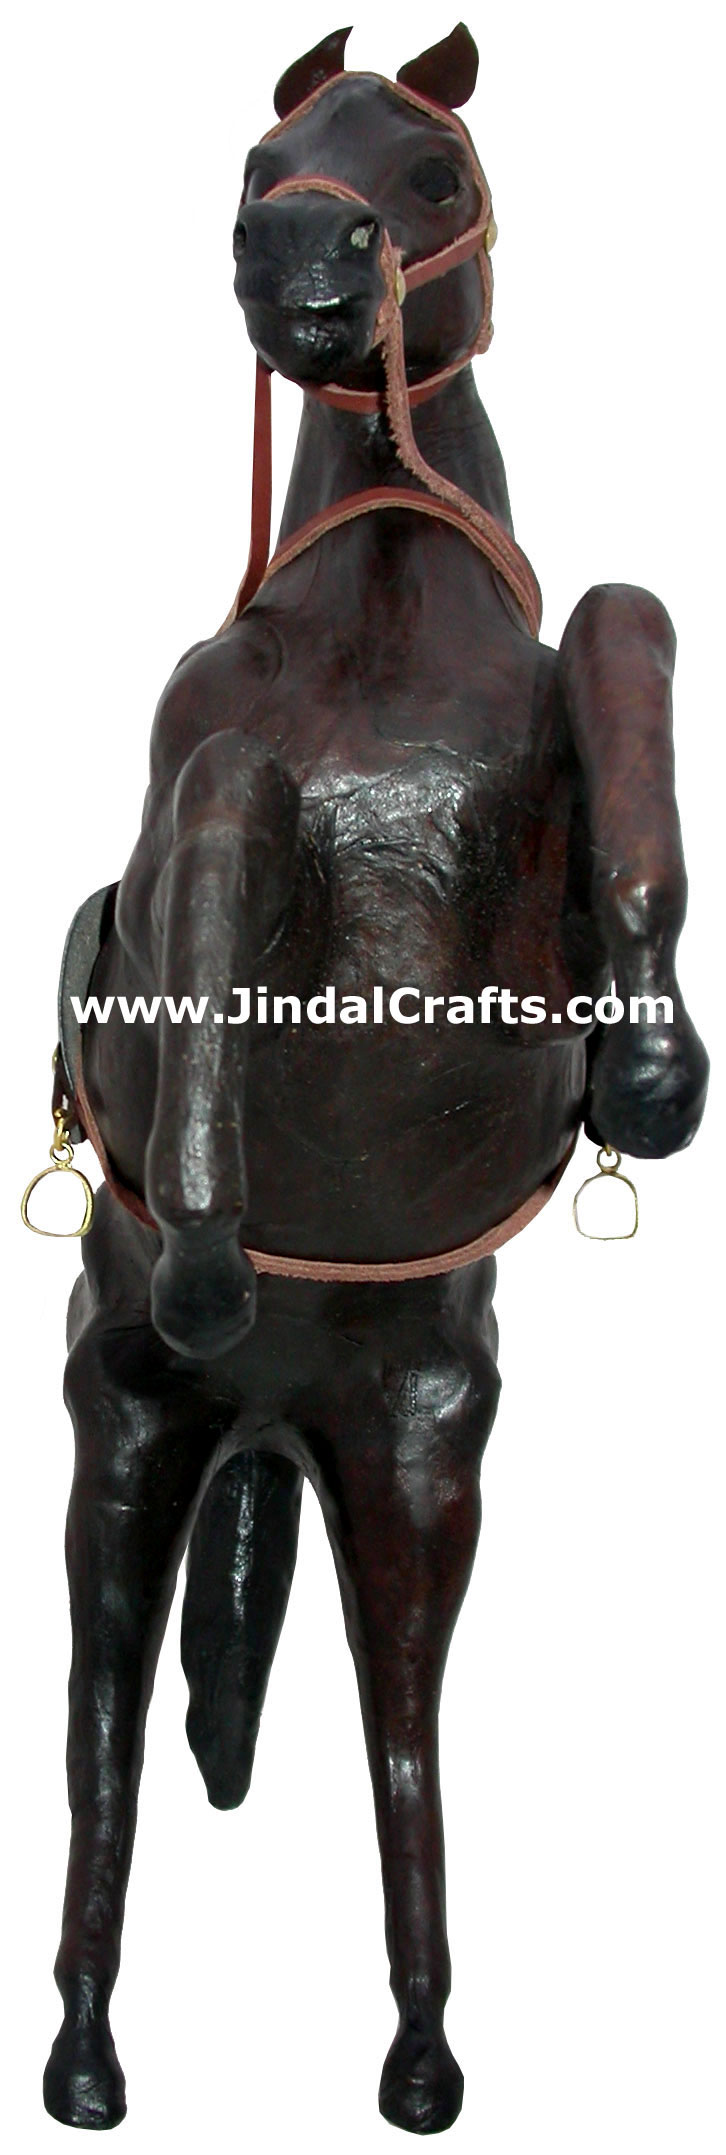 Horse - Handmade Stuffed Leather Animals Toys India Art